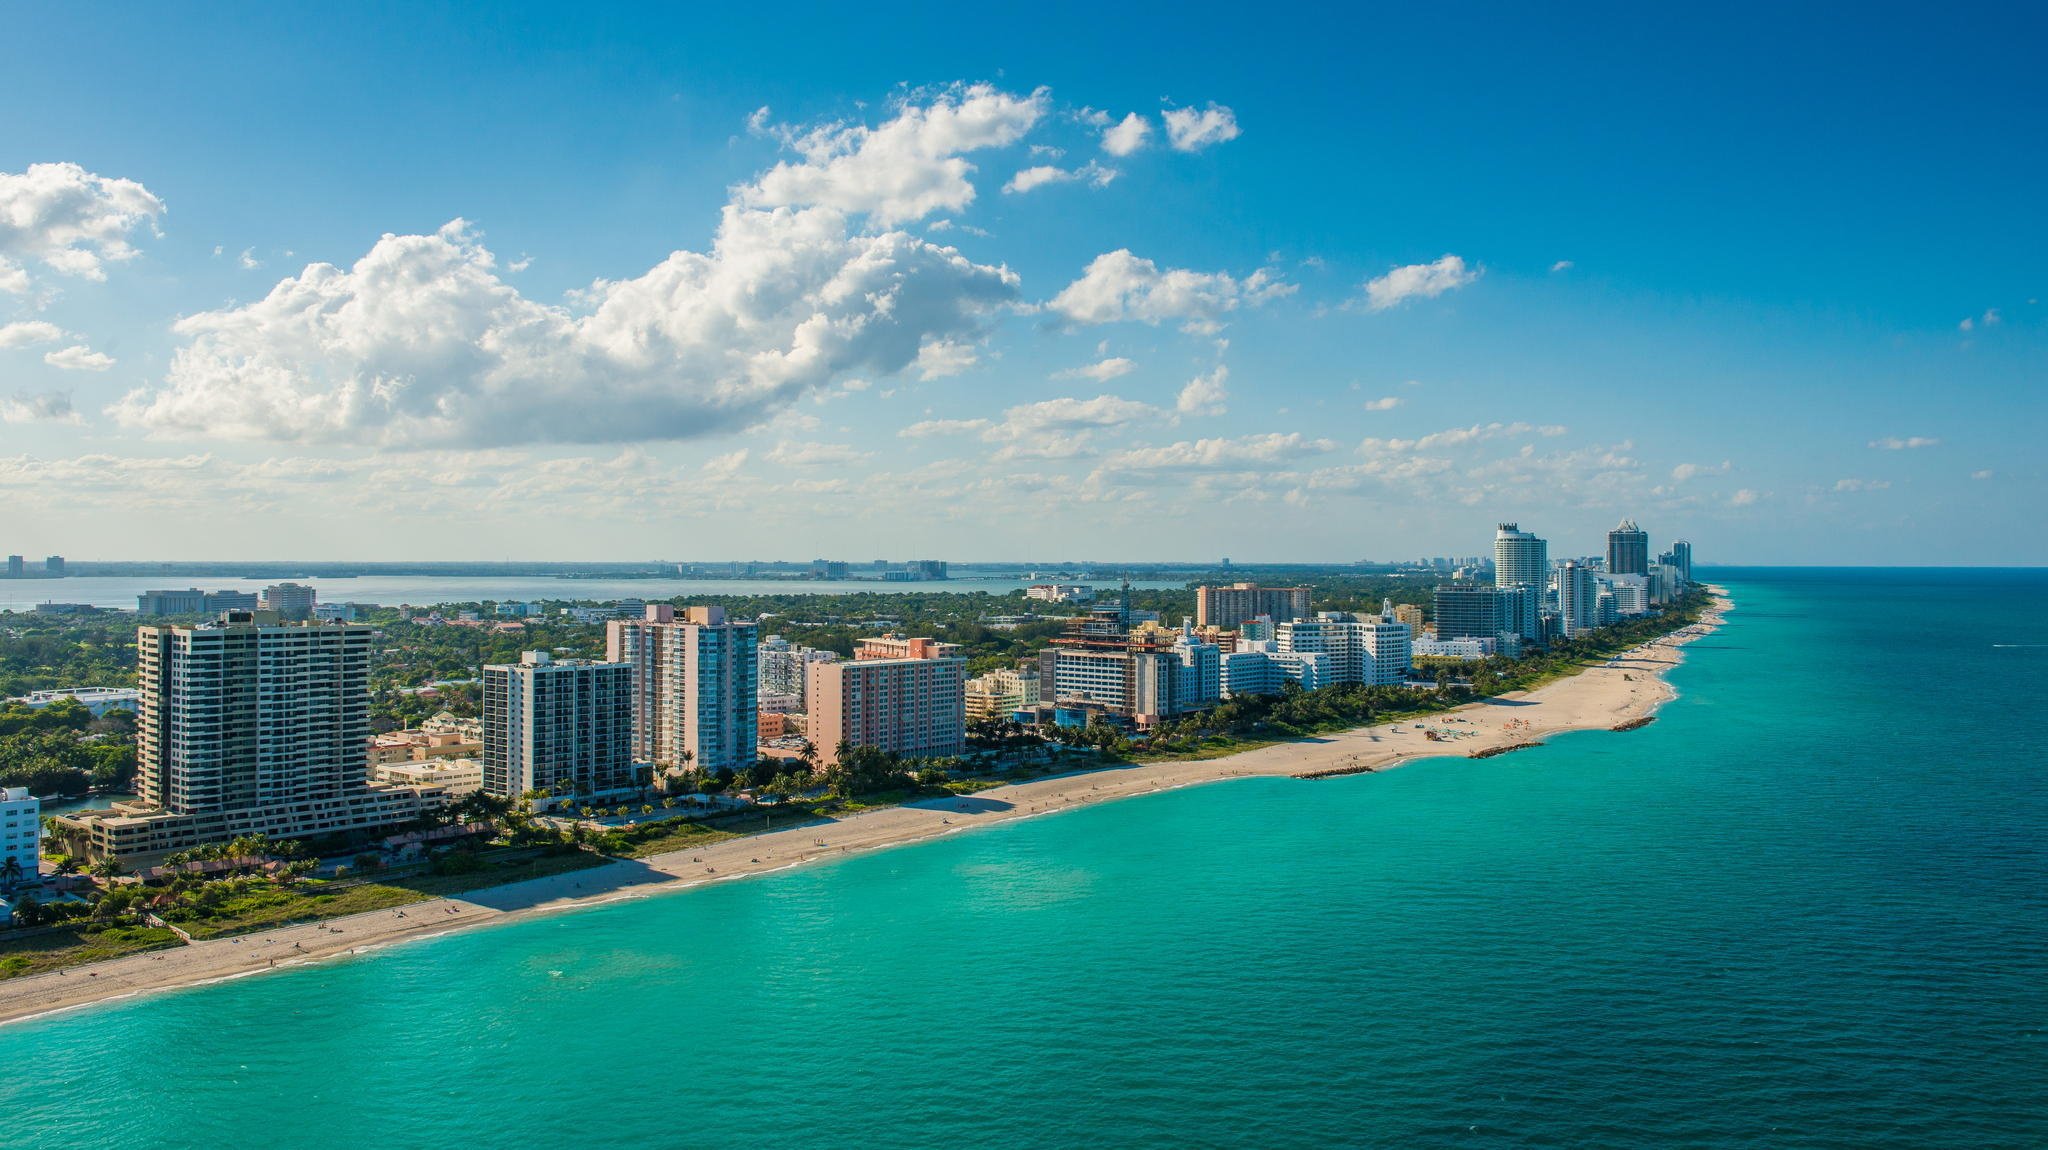 HD wallpaper: Miami, Vice city, South Beach, best